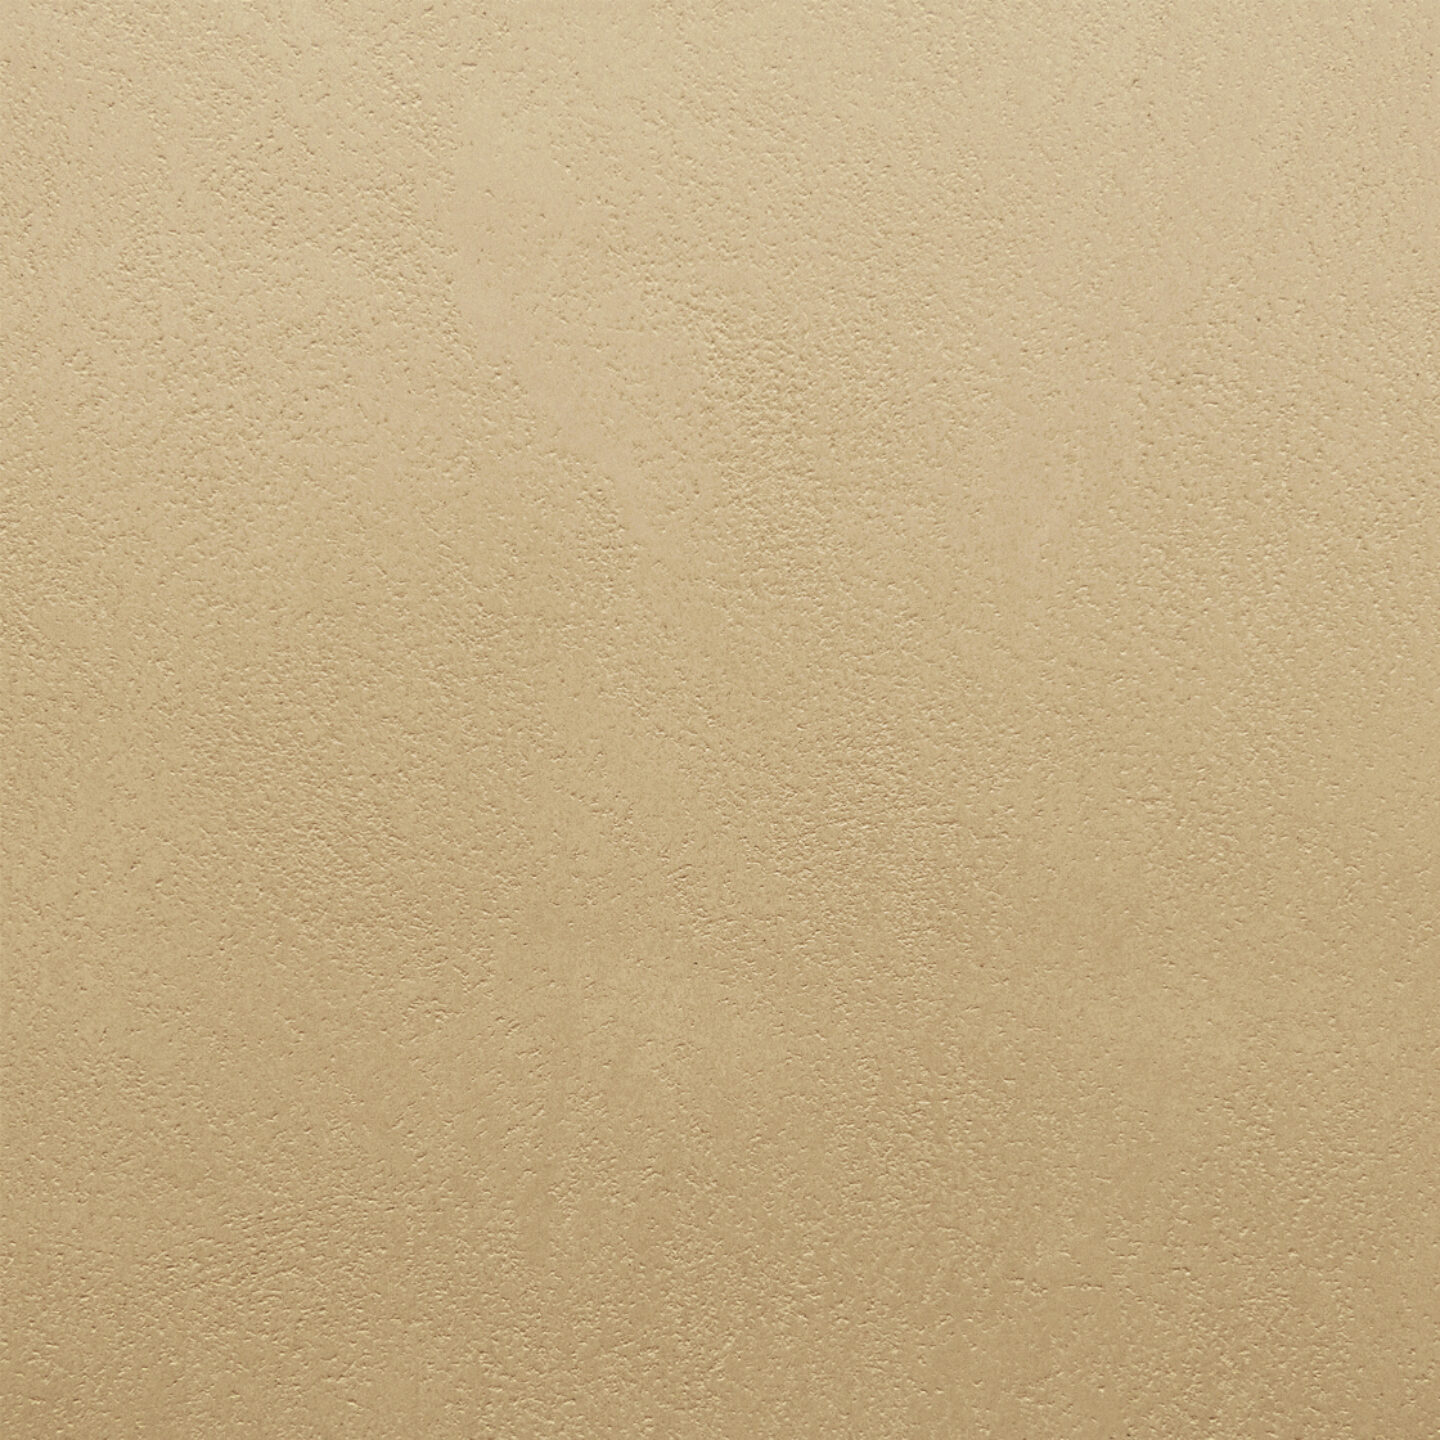 Close up of Armourcoat leatherstone exterior polished plaster finish - 51